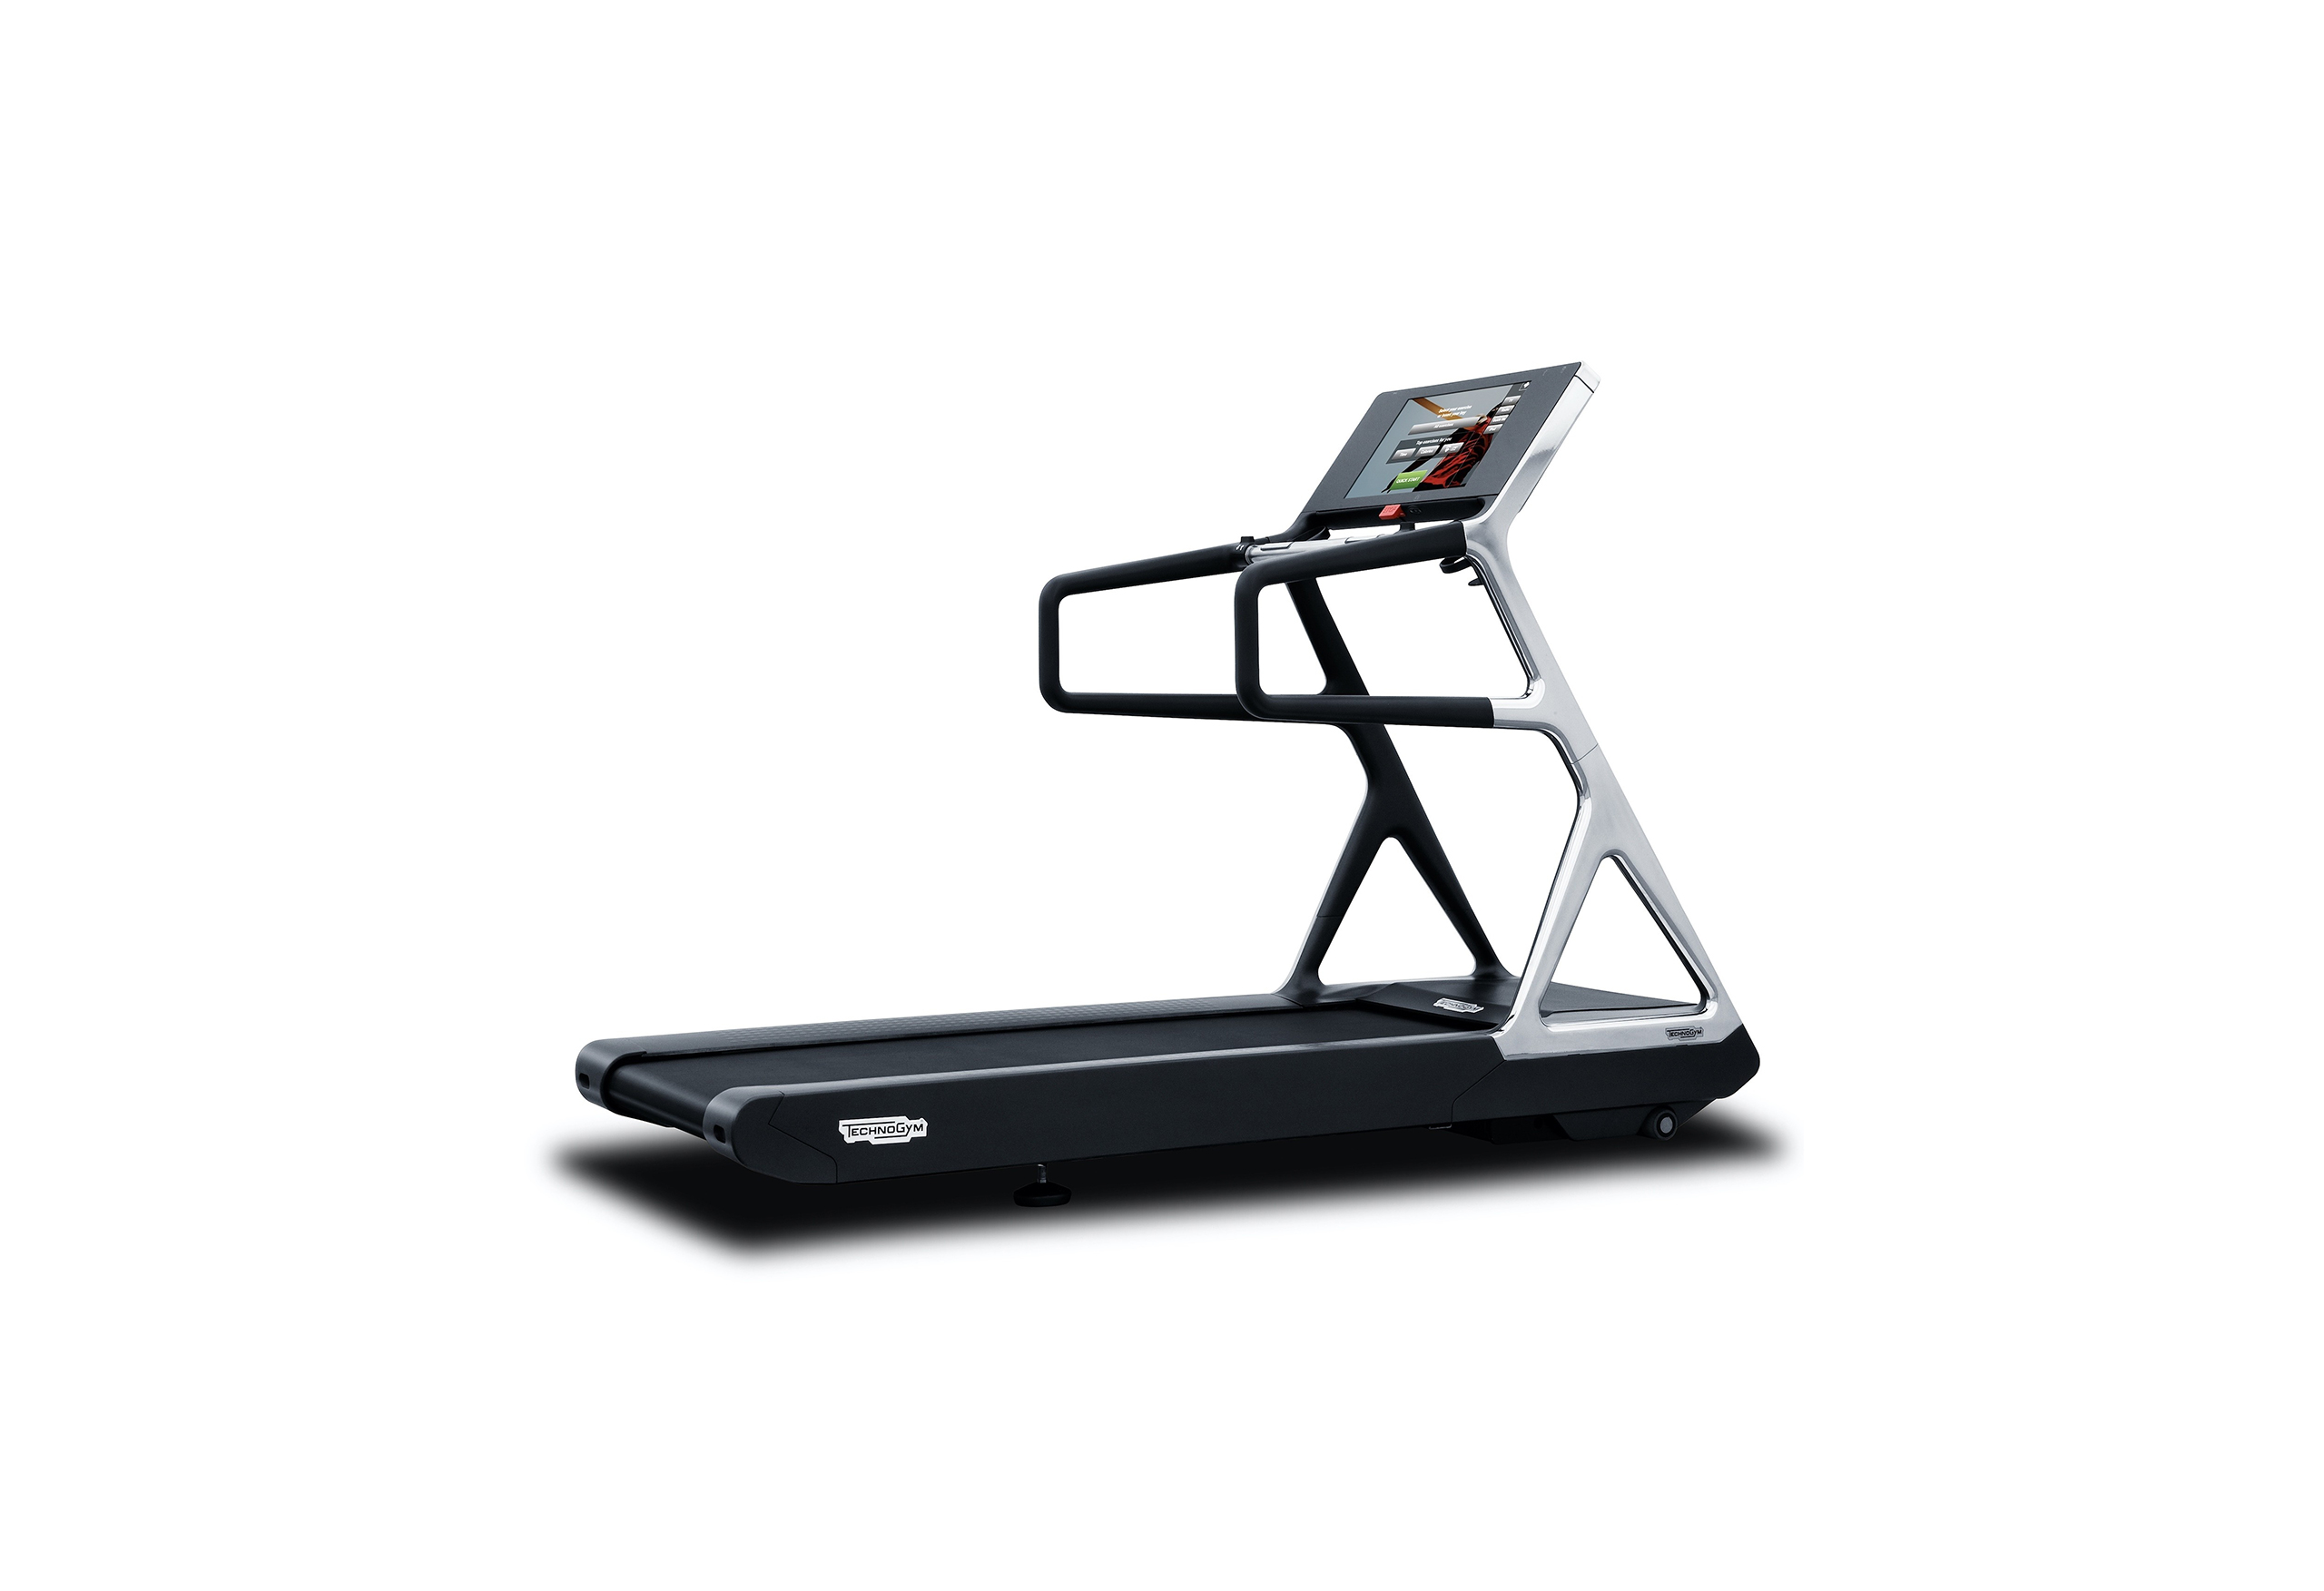 RUN PERSONAL treadmill designed by Antonio Citterio for Technogym, © Technogym.